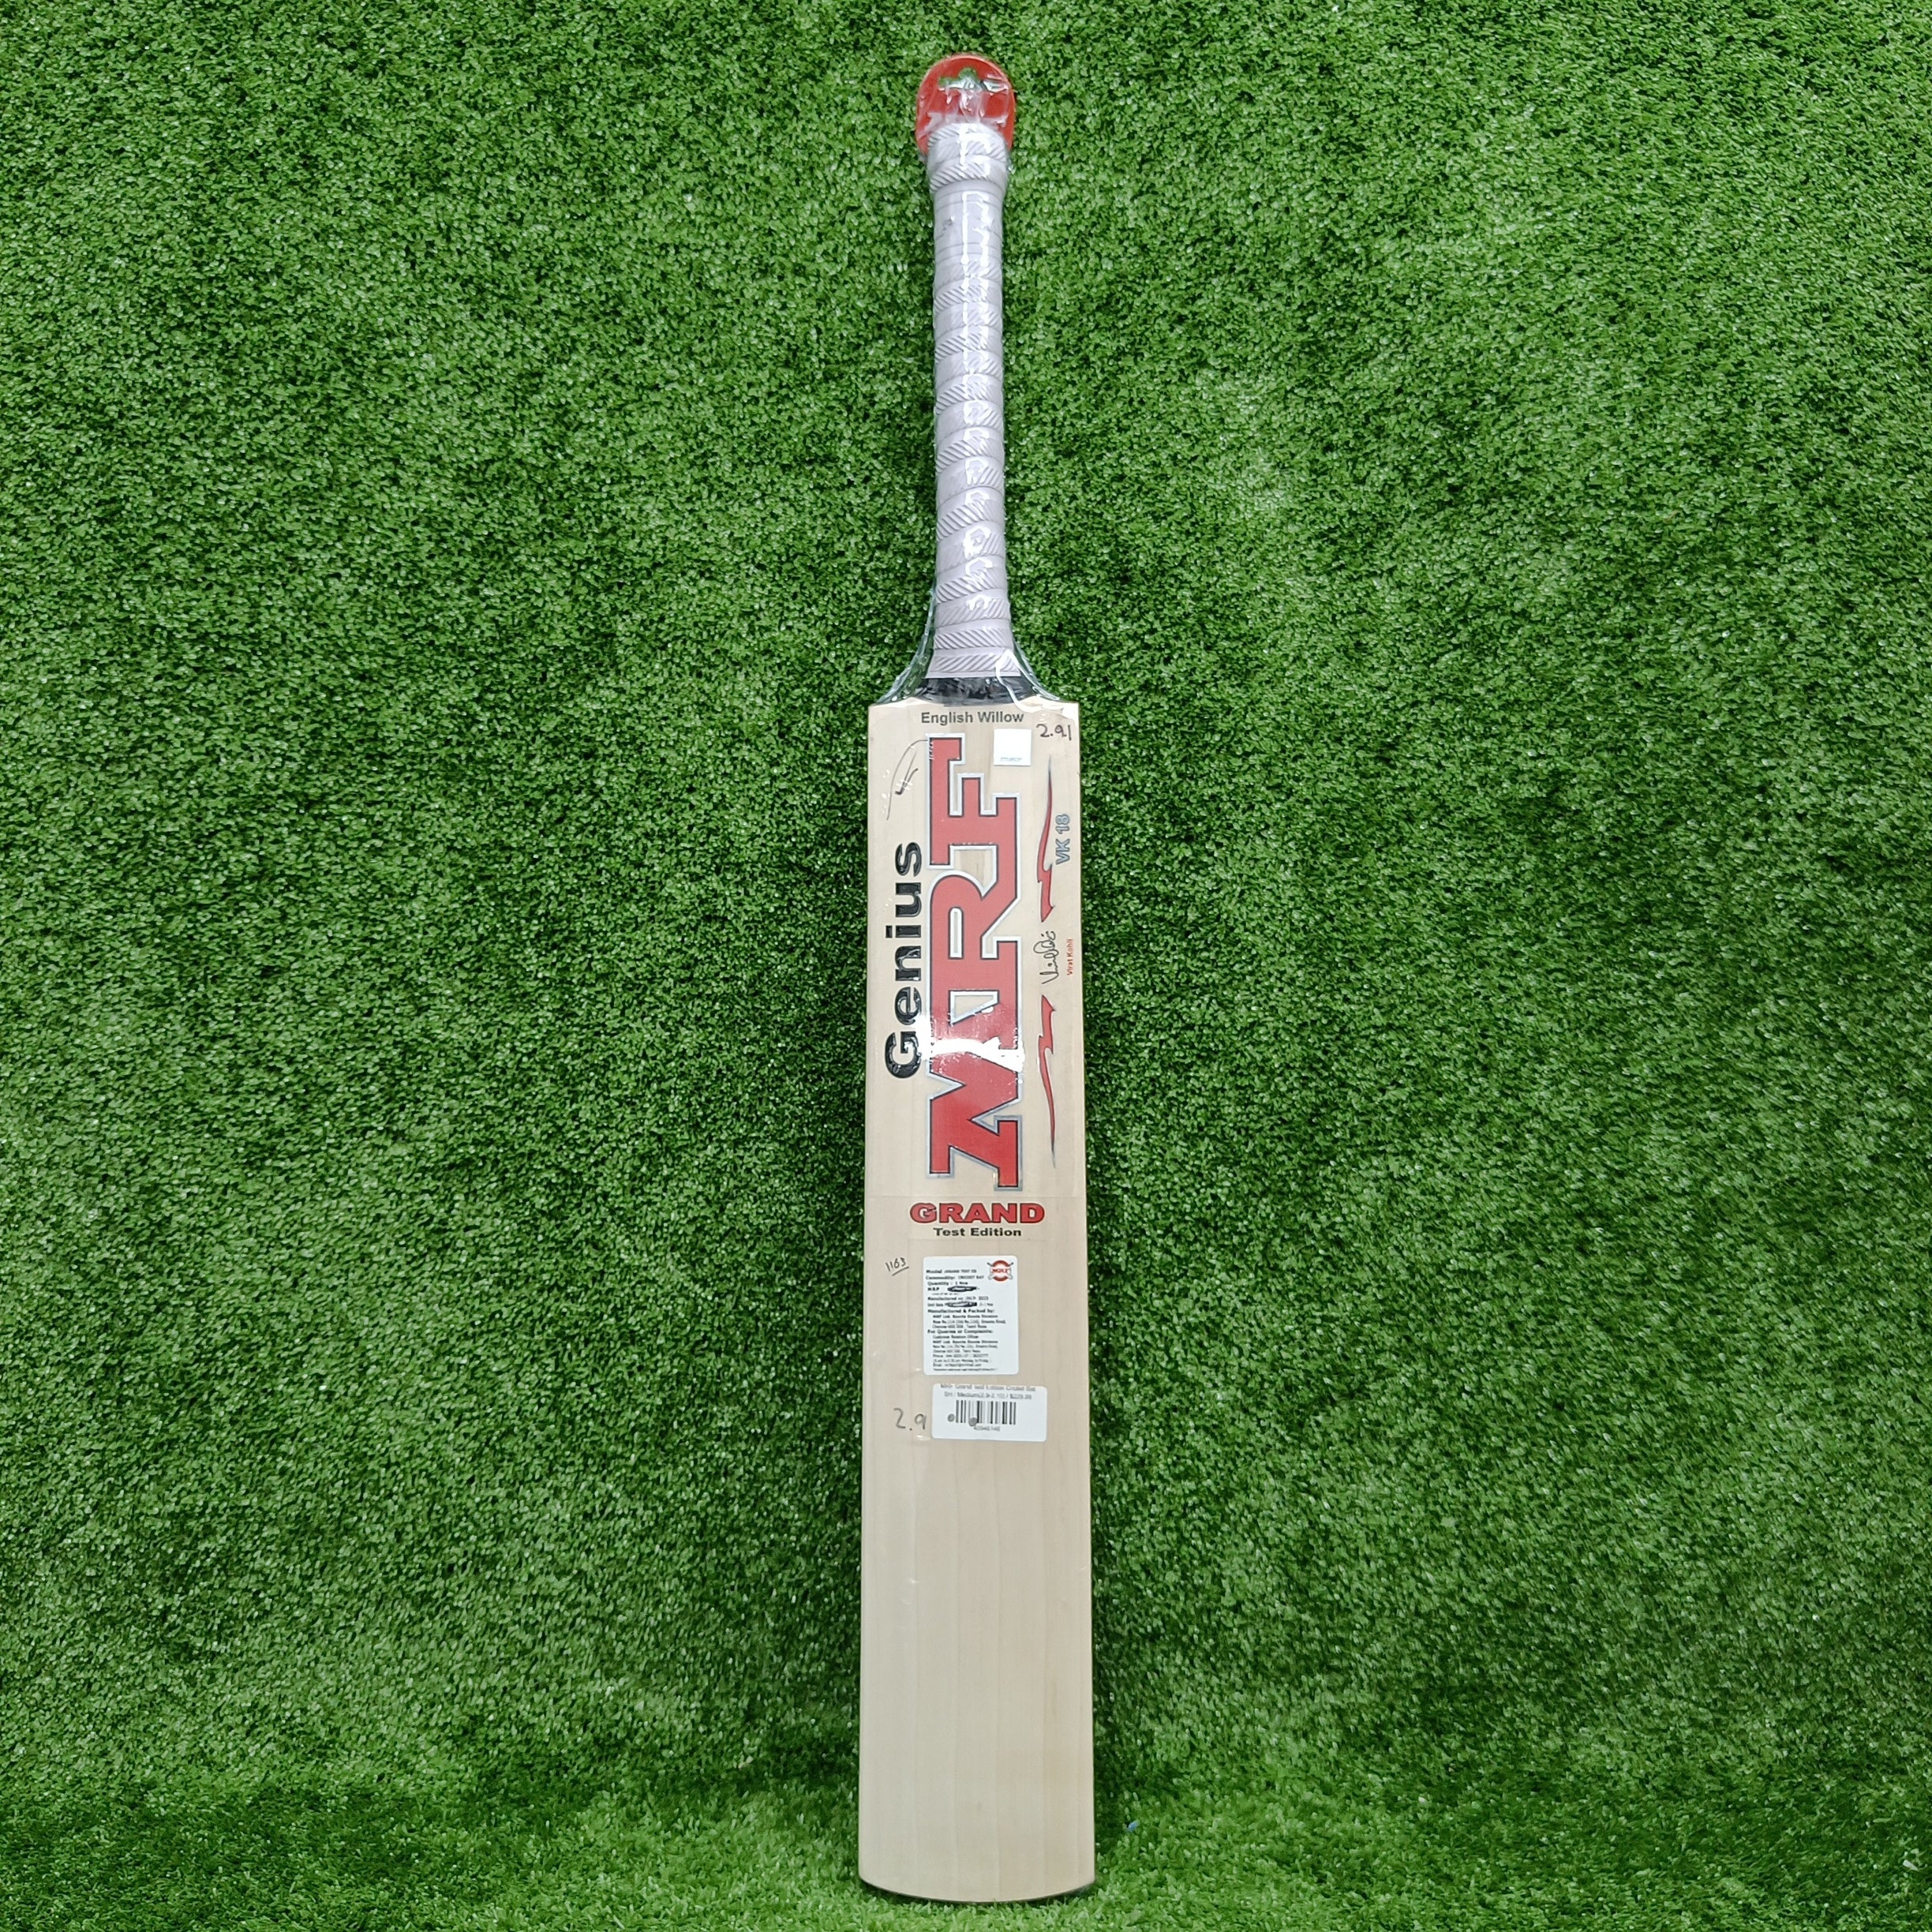 MRF Genius Grand Test Edition Cricket Bat